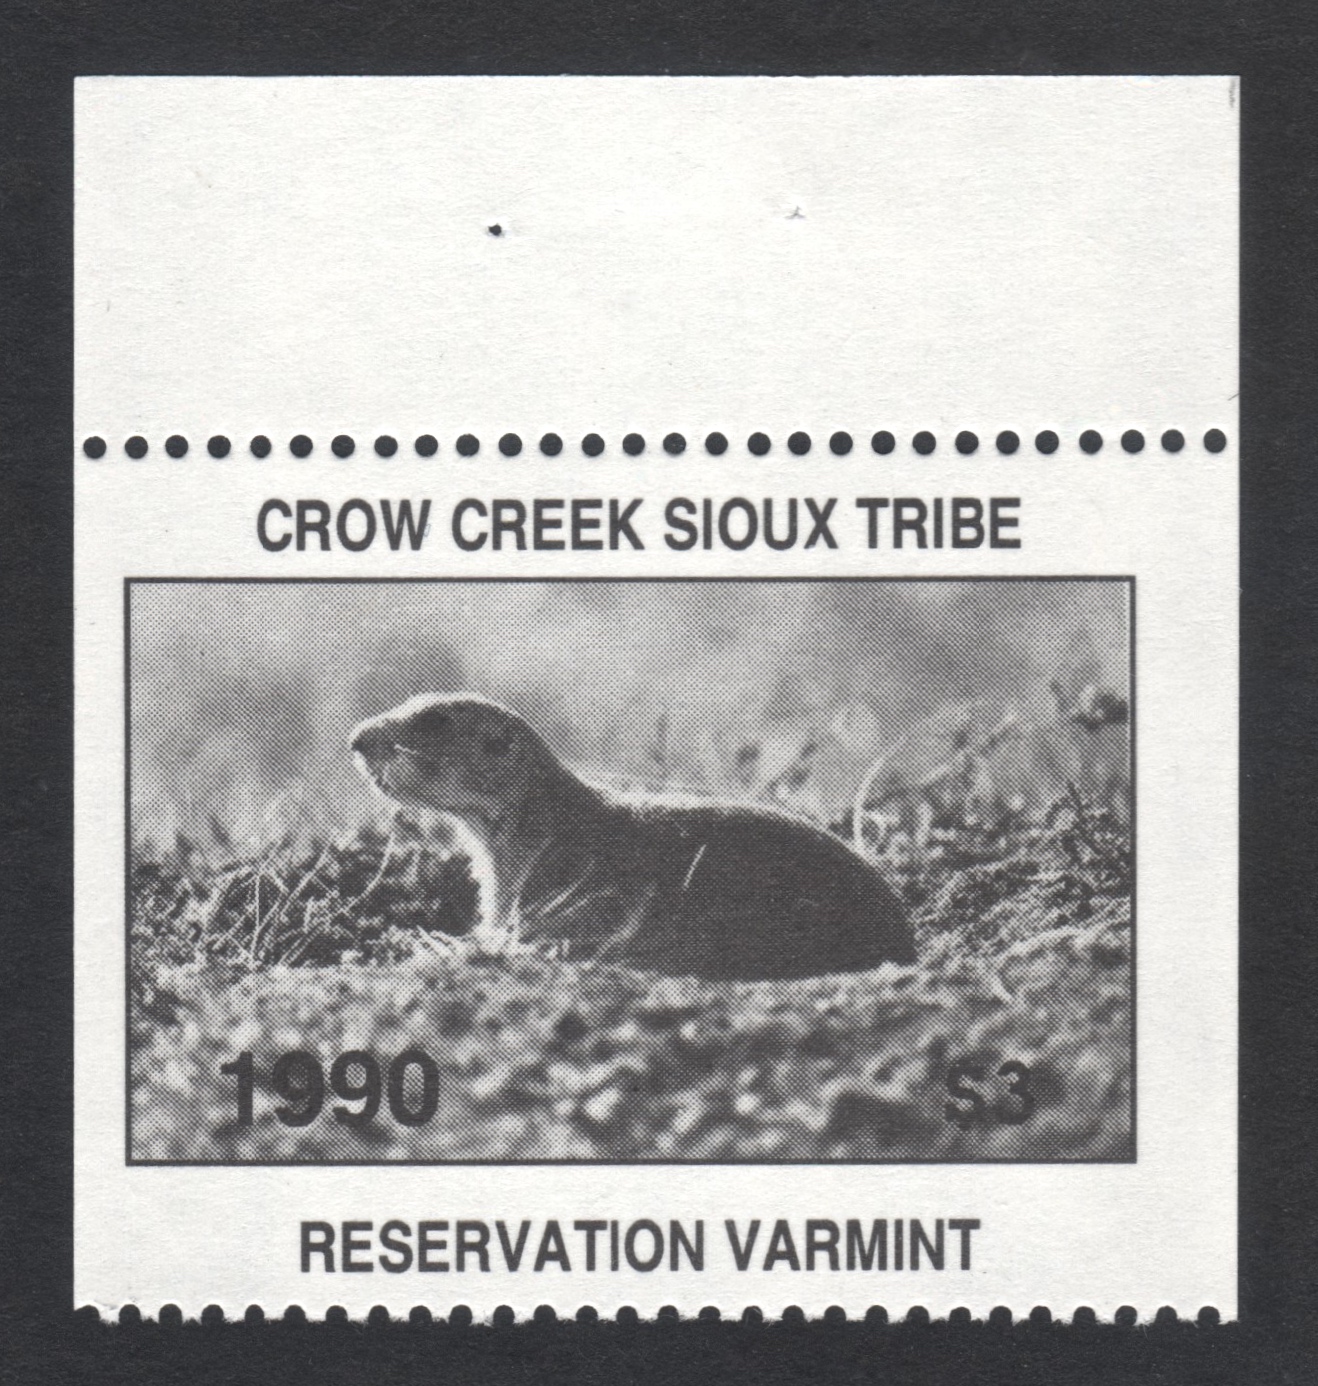 1990 Error Crow Creek Reservation Varmint Missing Serial Number